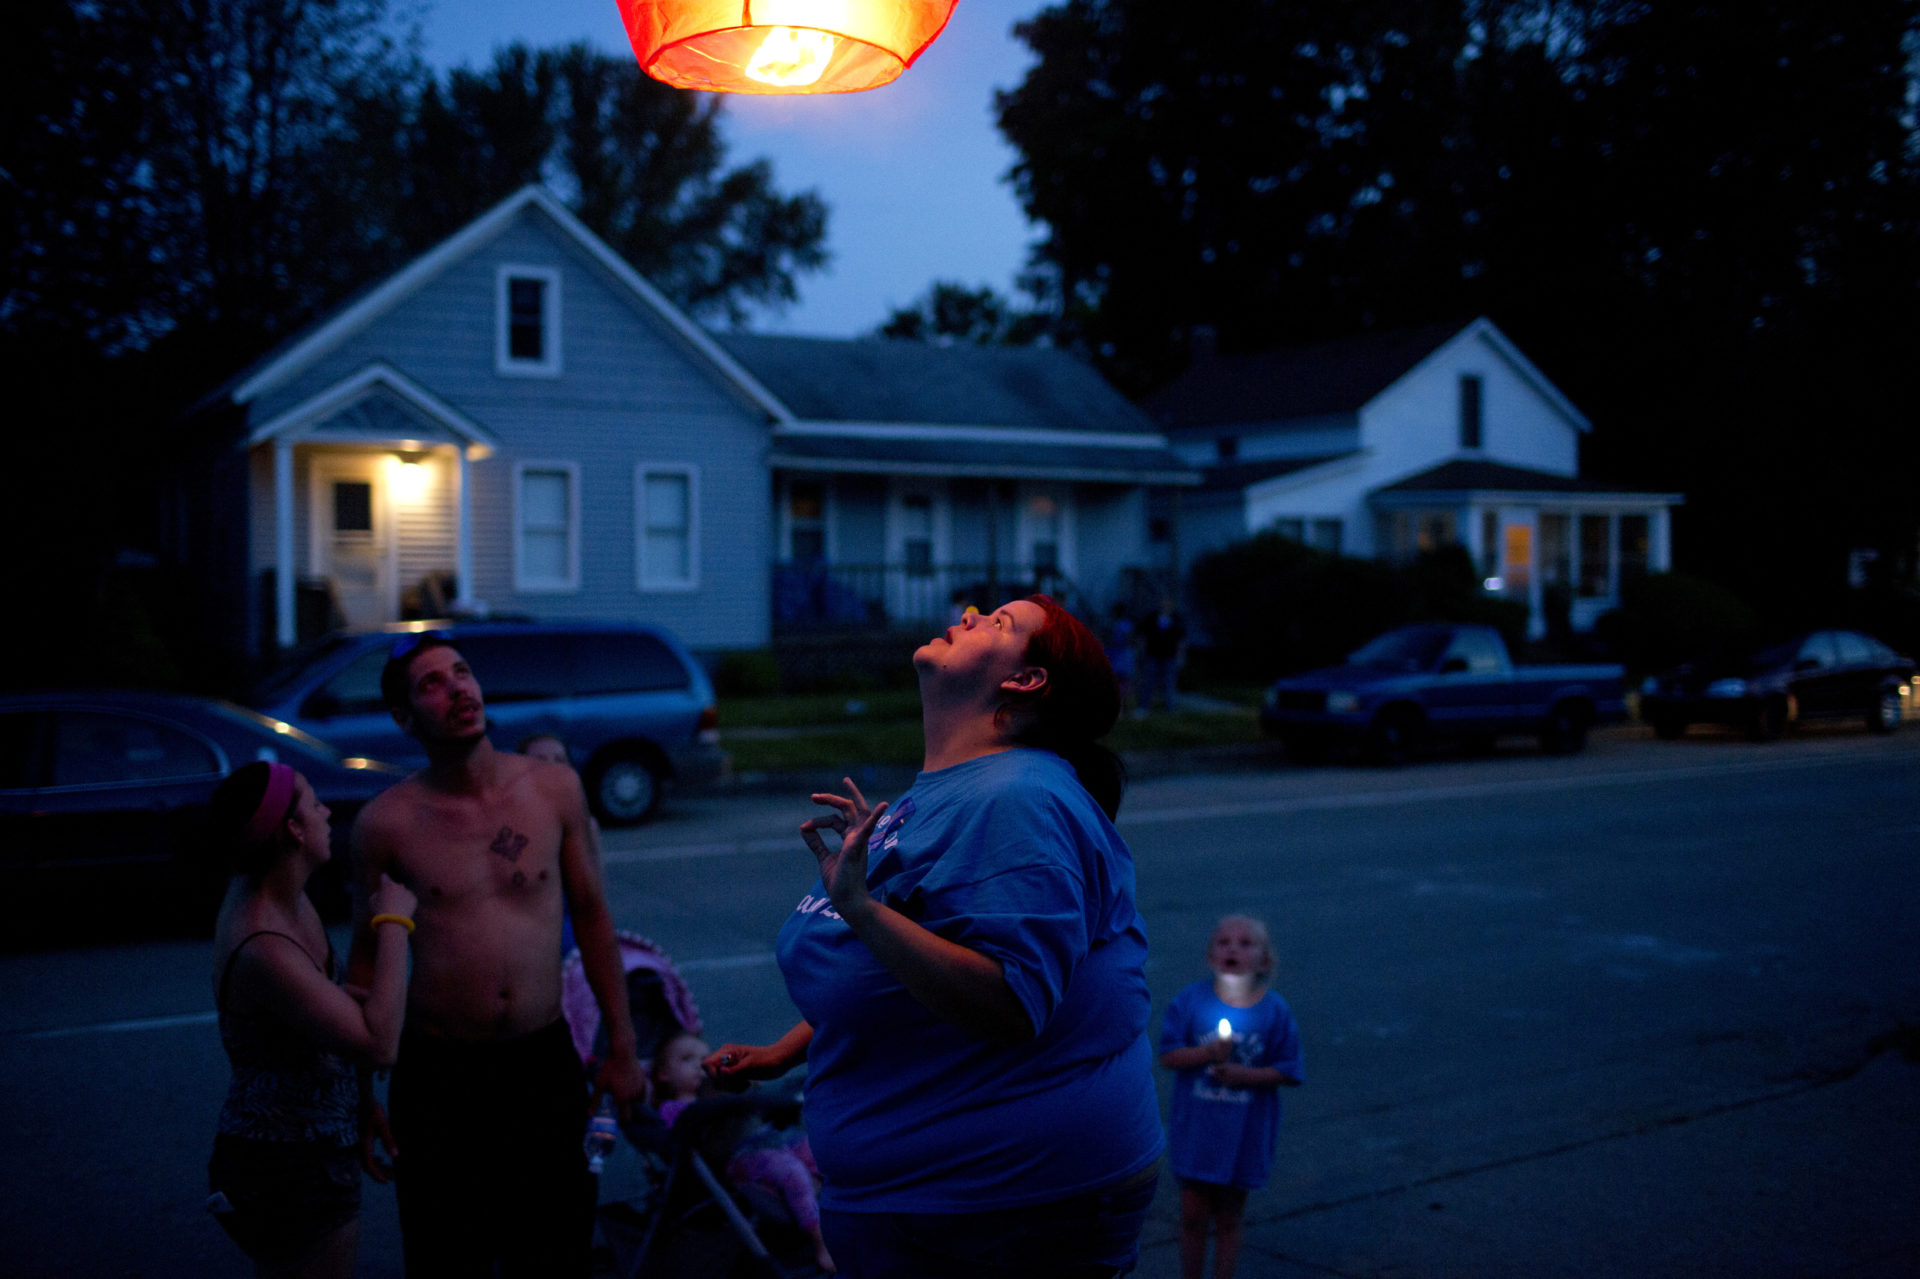 A lantern floats into a blue night sky